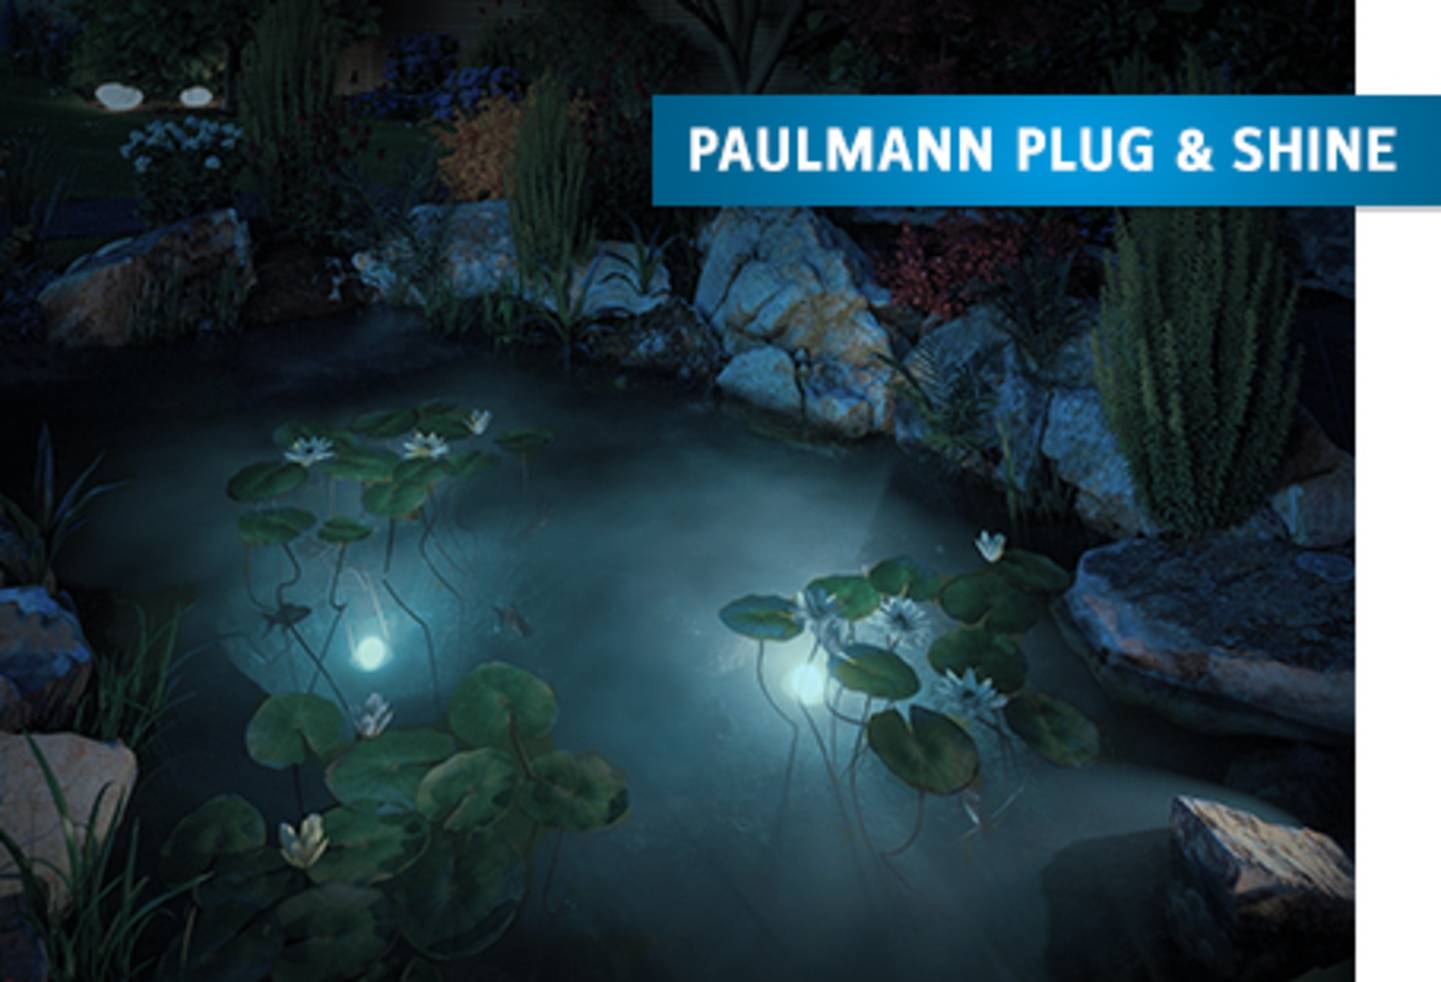 Paulmann Plug & Shine